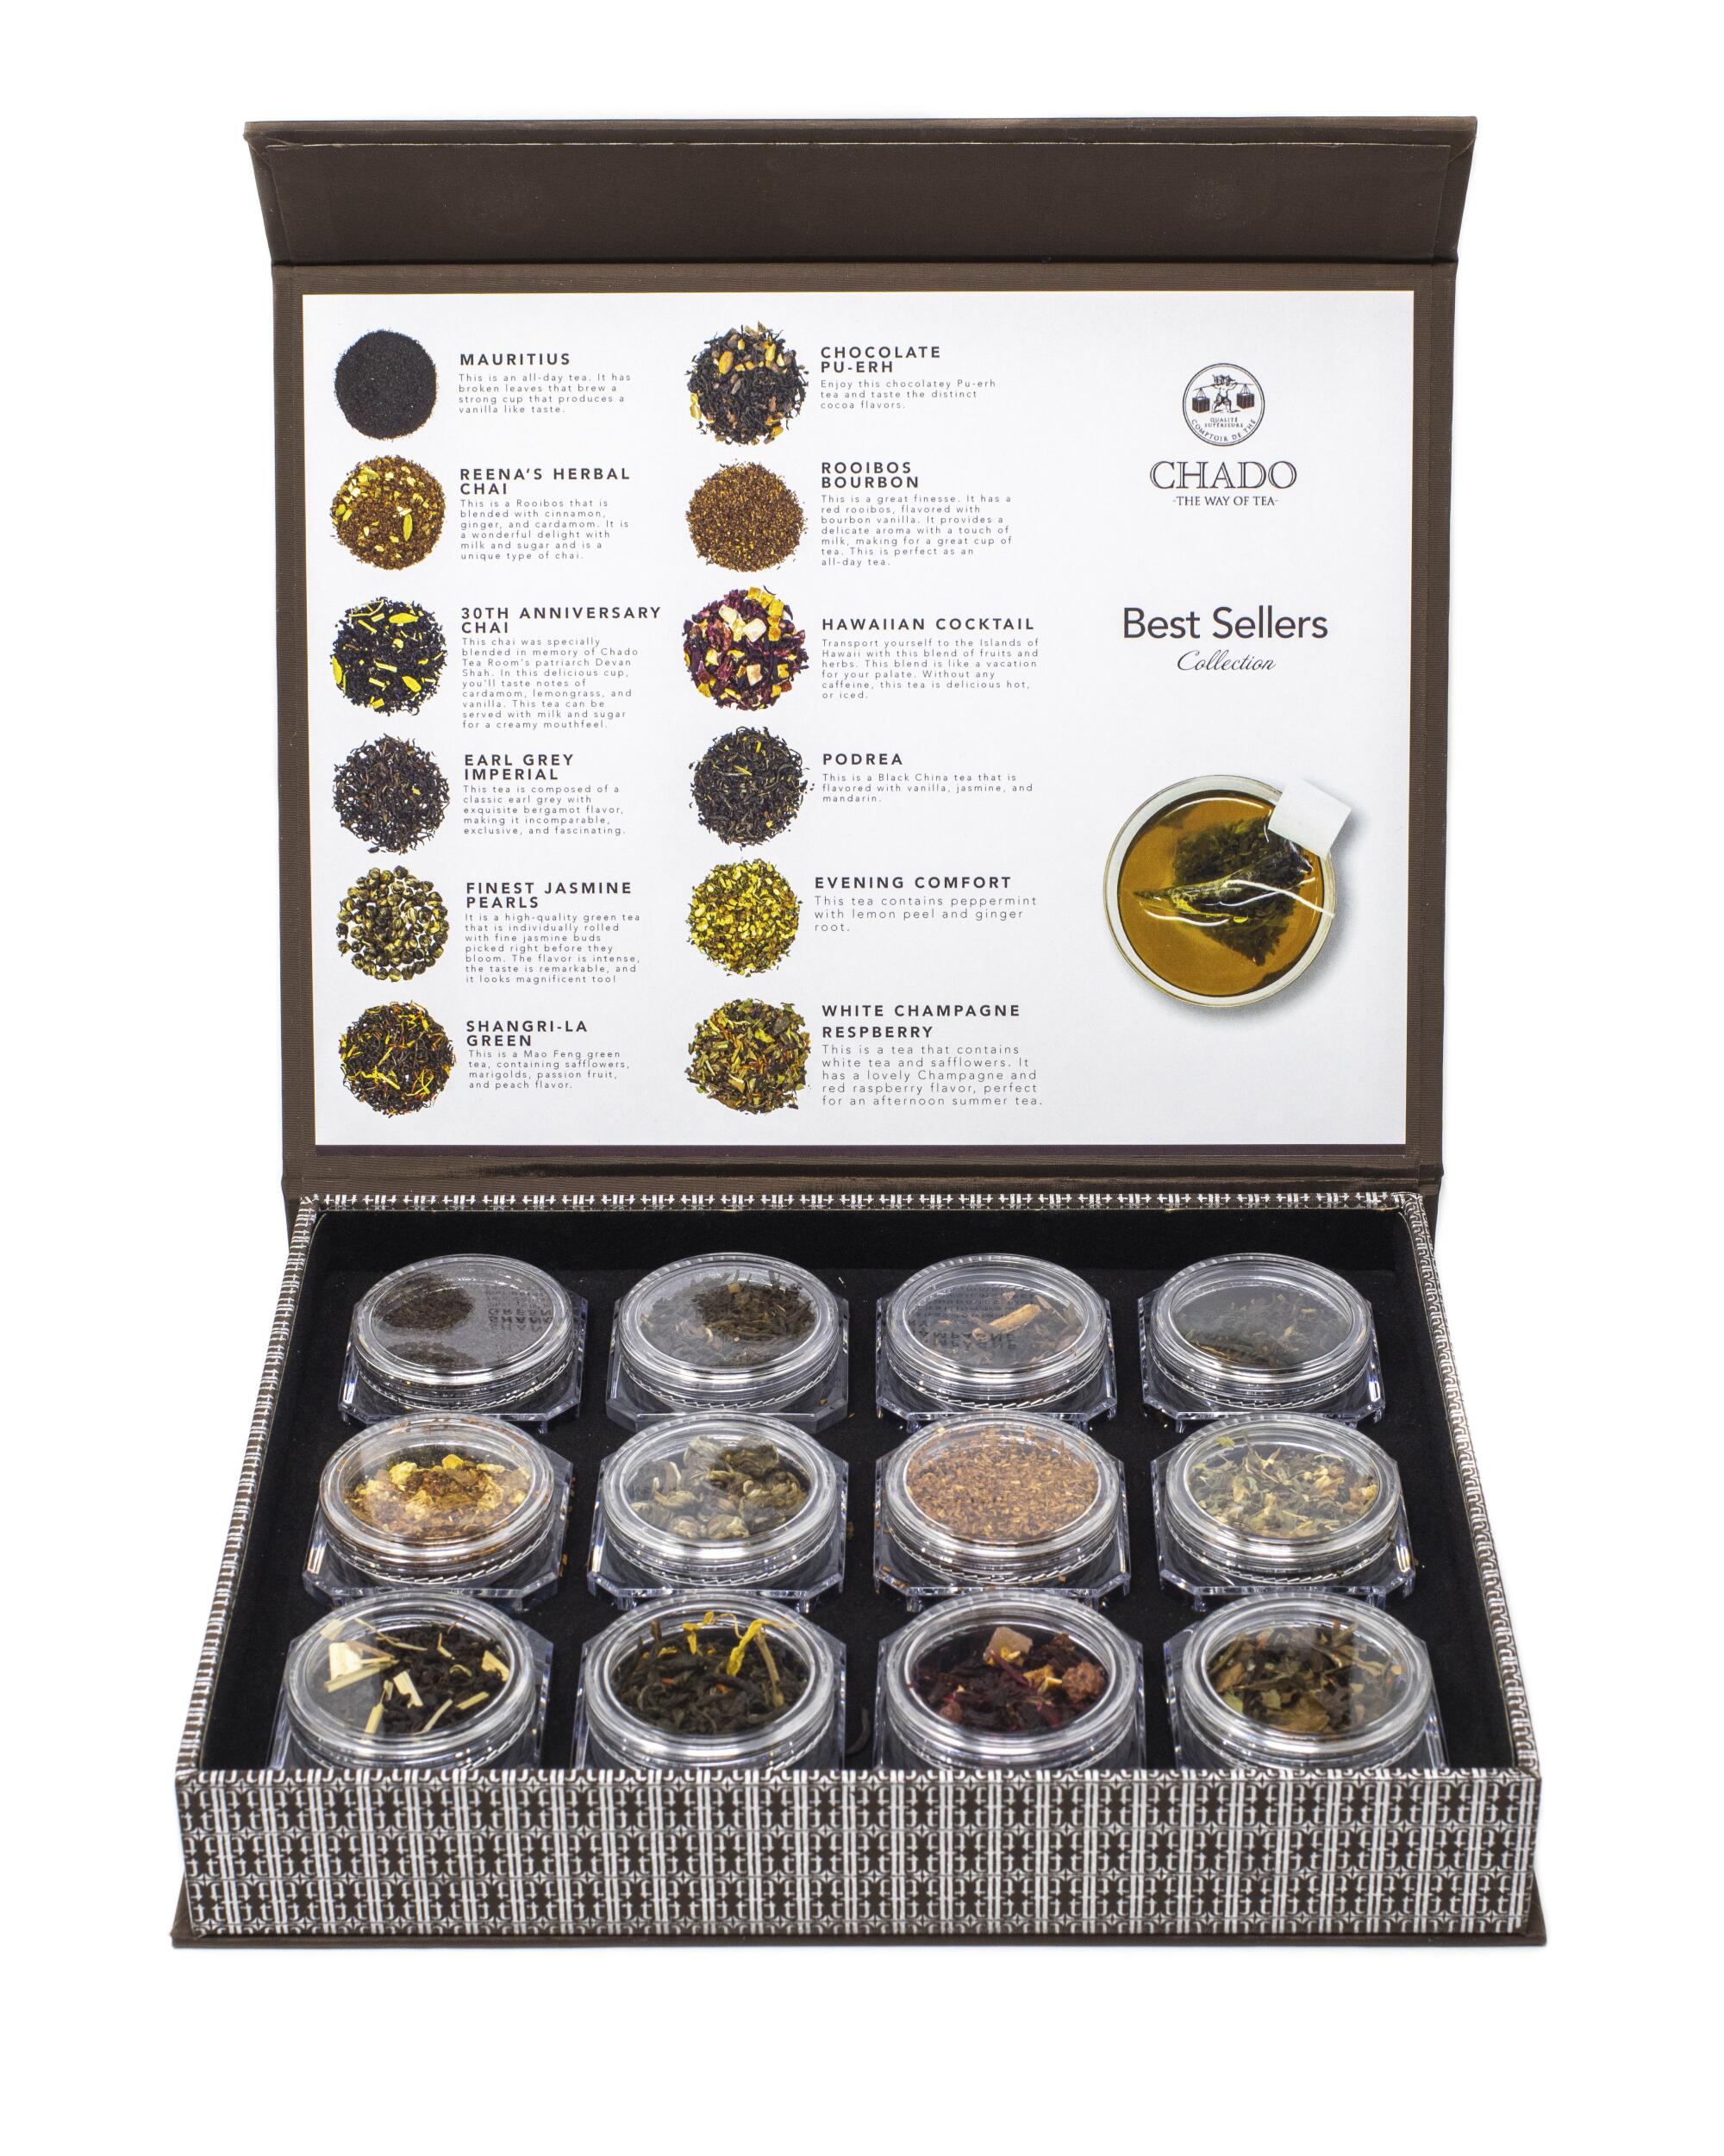 The Chado Tea Room gift box with 20 sample sizes of tea